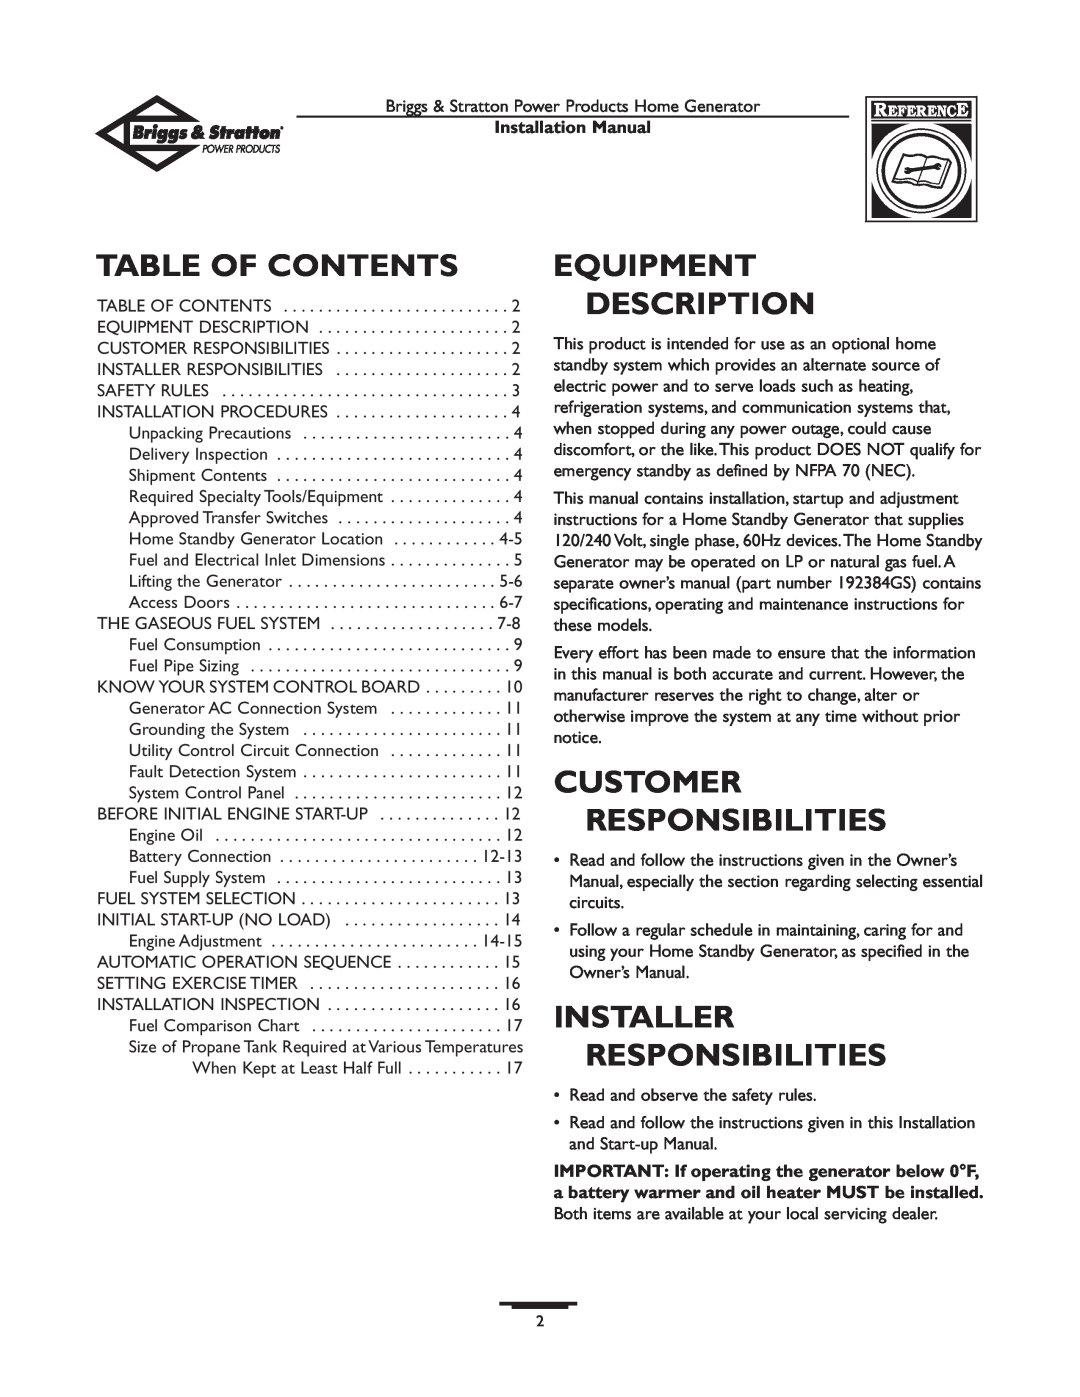 Briggs & Stratton 01938-0 Table Of Contents, Equipment Description, Customer Responsibilities, Installer Responsibilities 